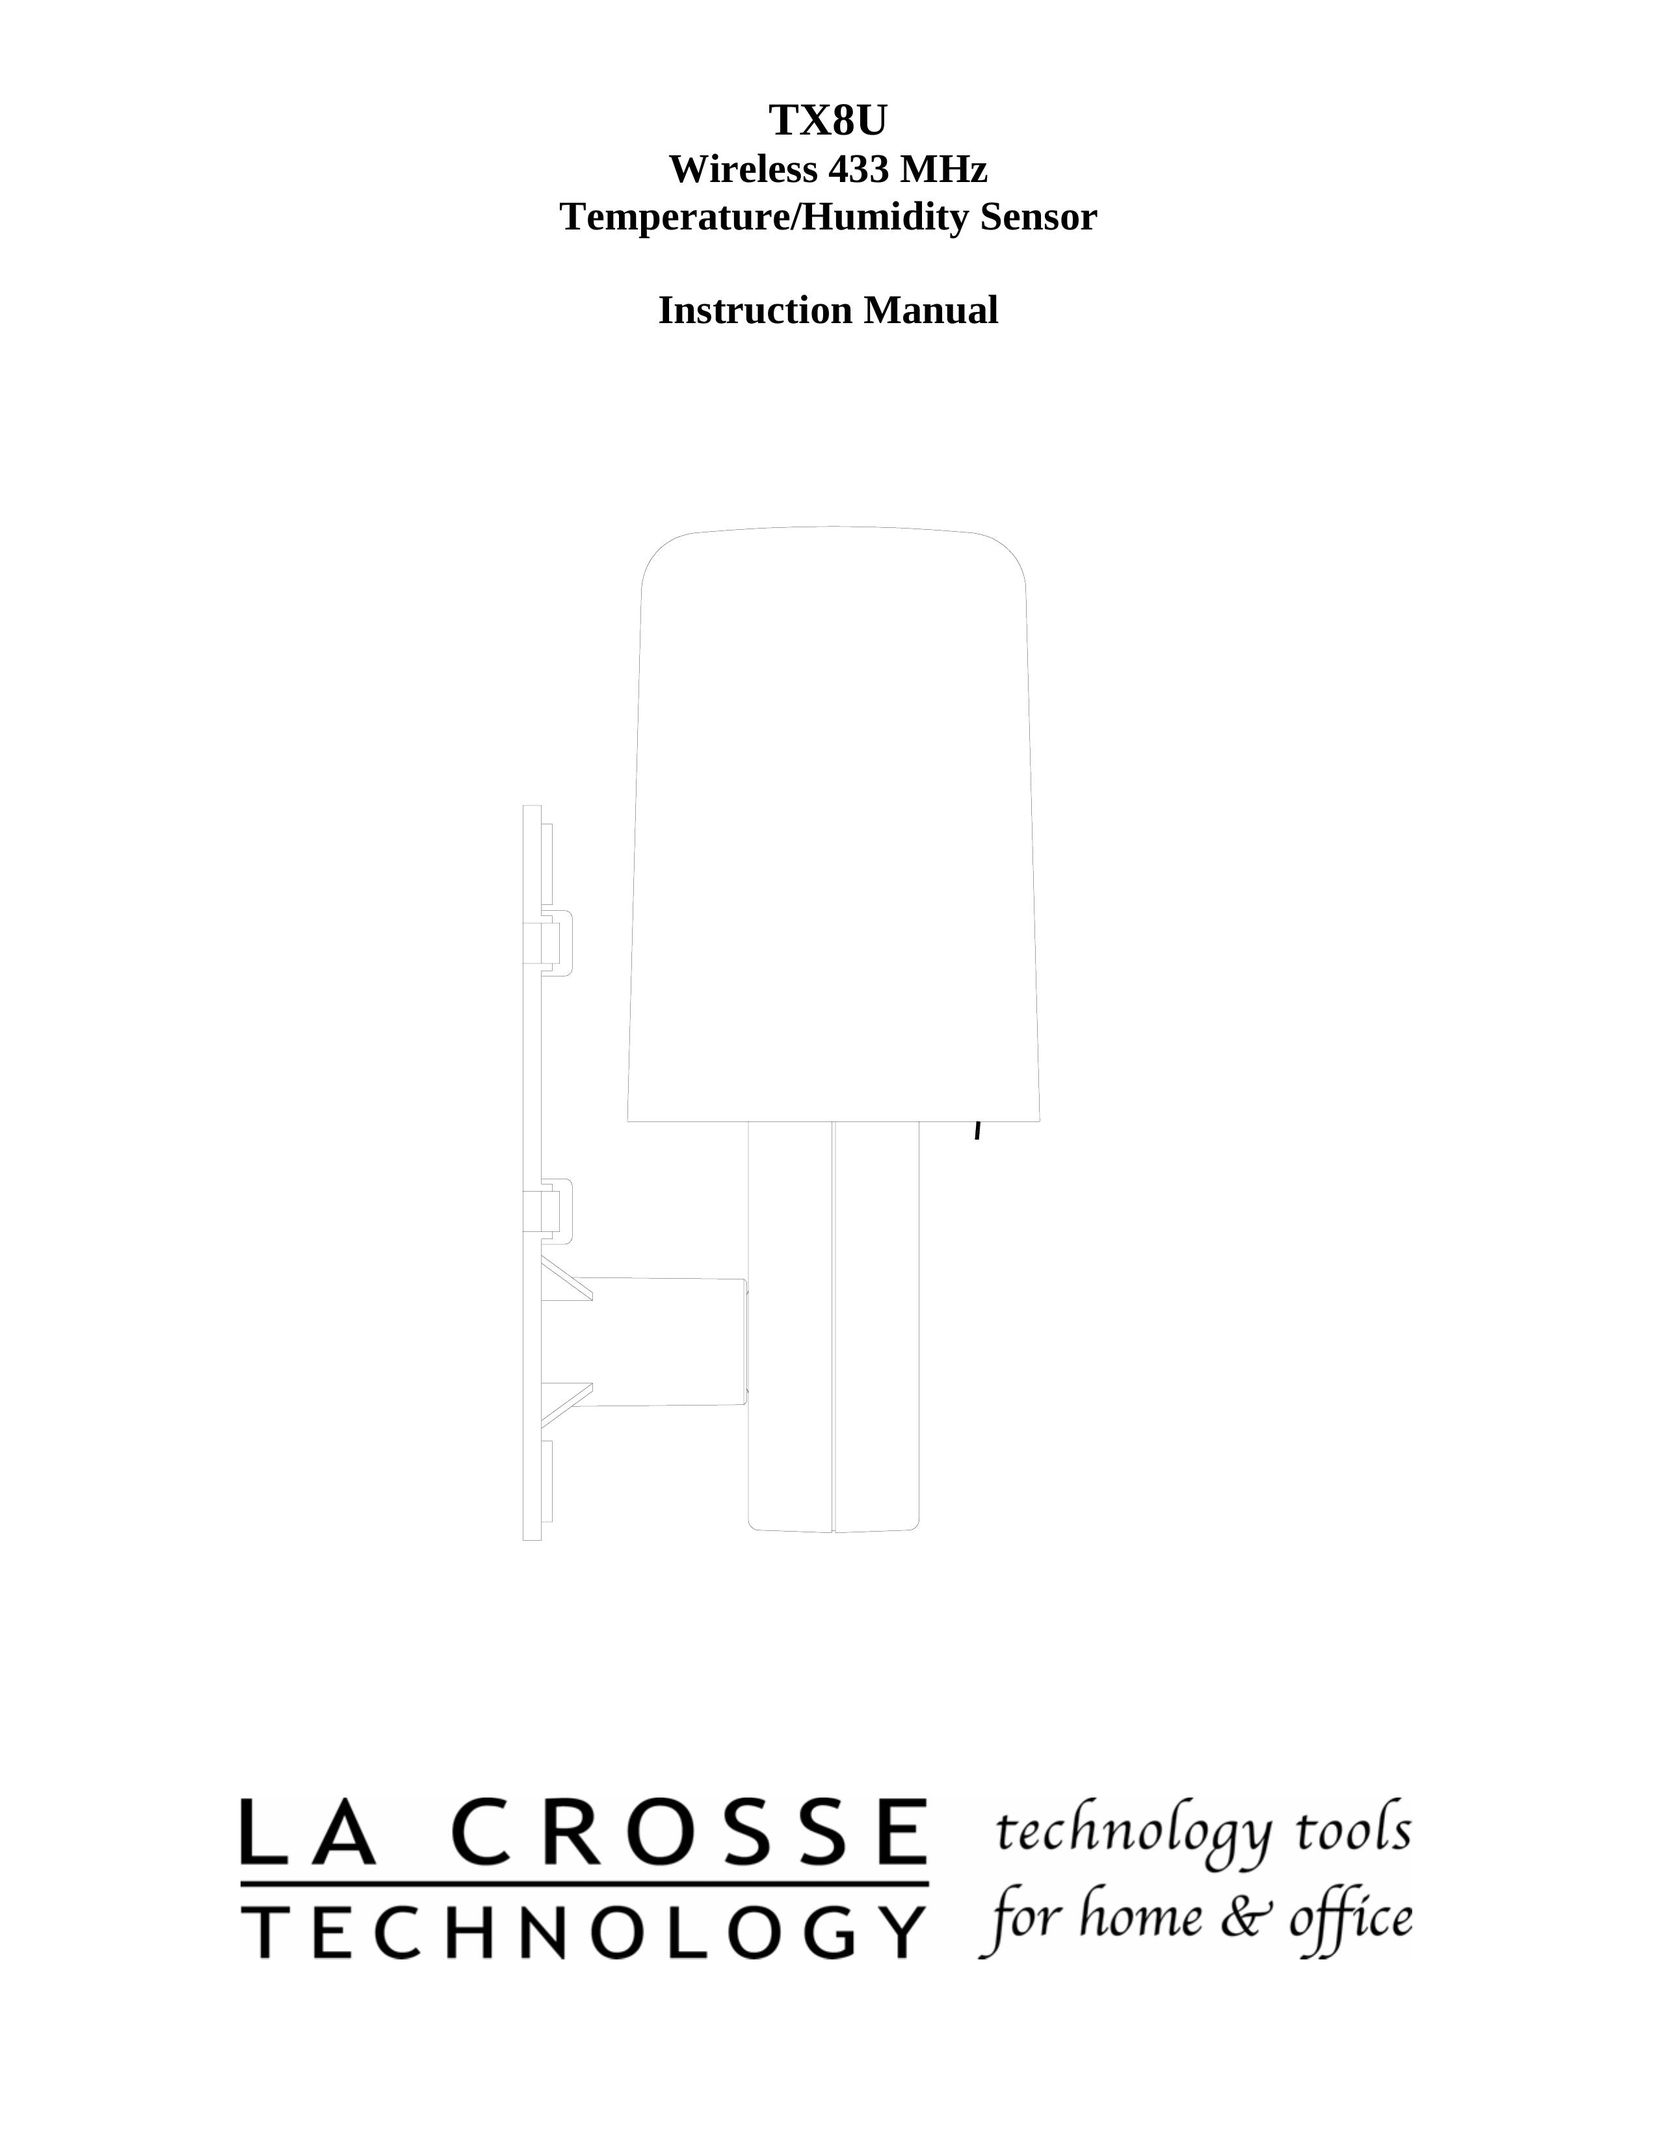 La Crosse Technology TX8U Stud Sensor User Manual